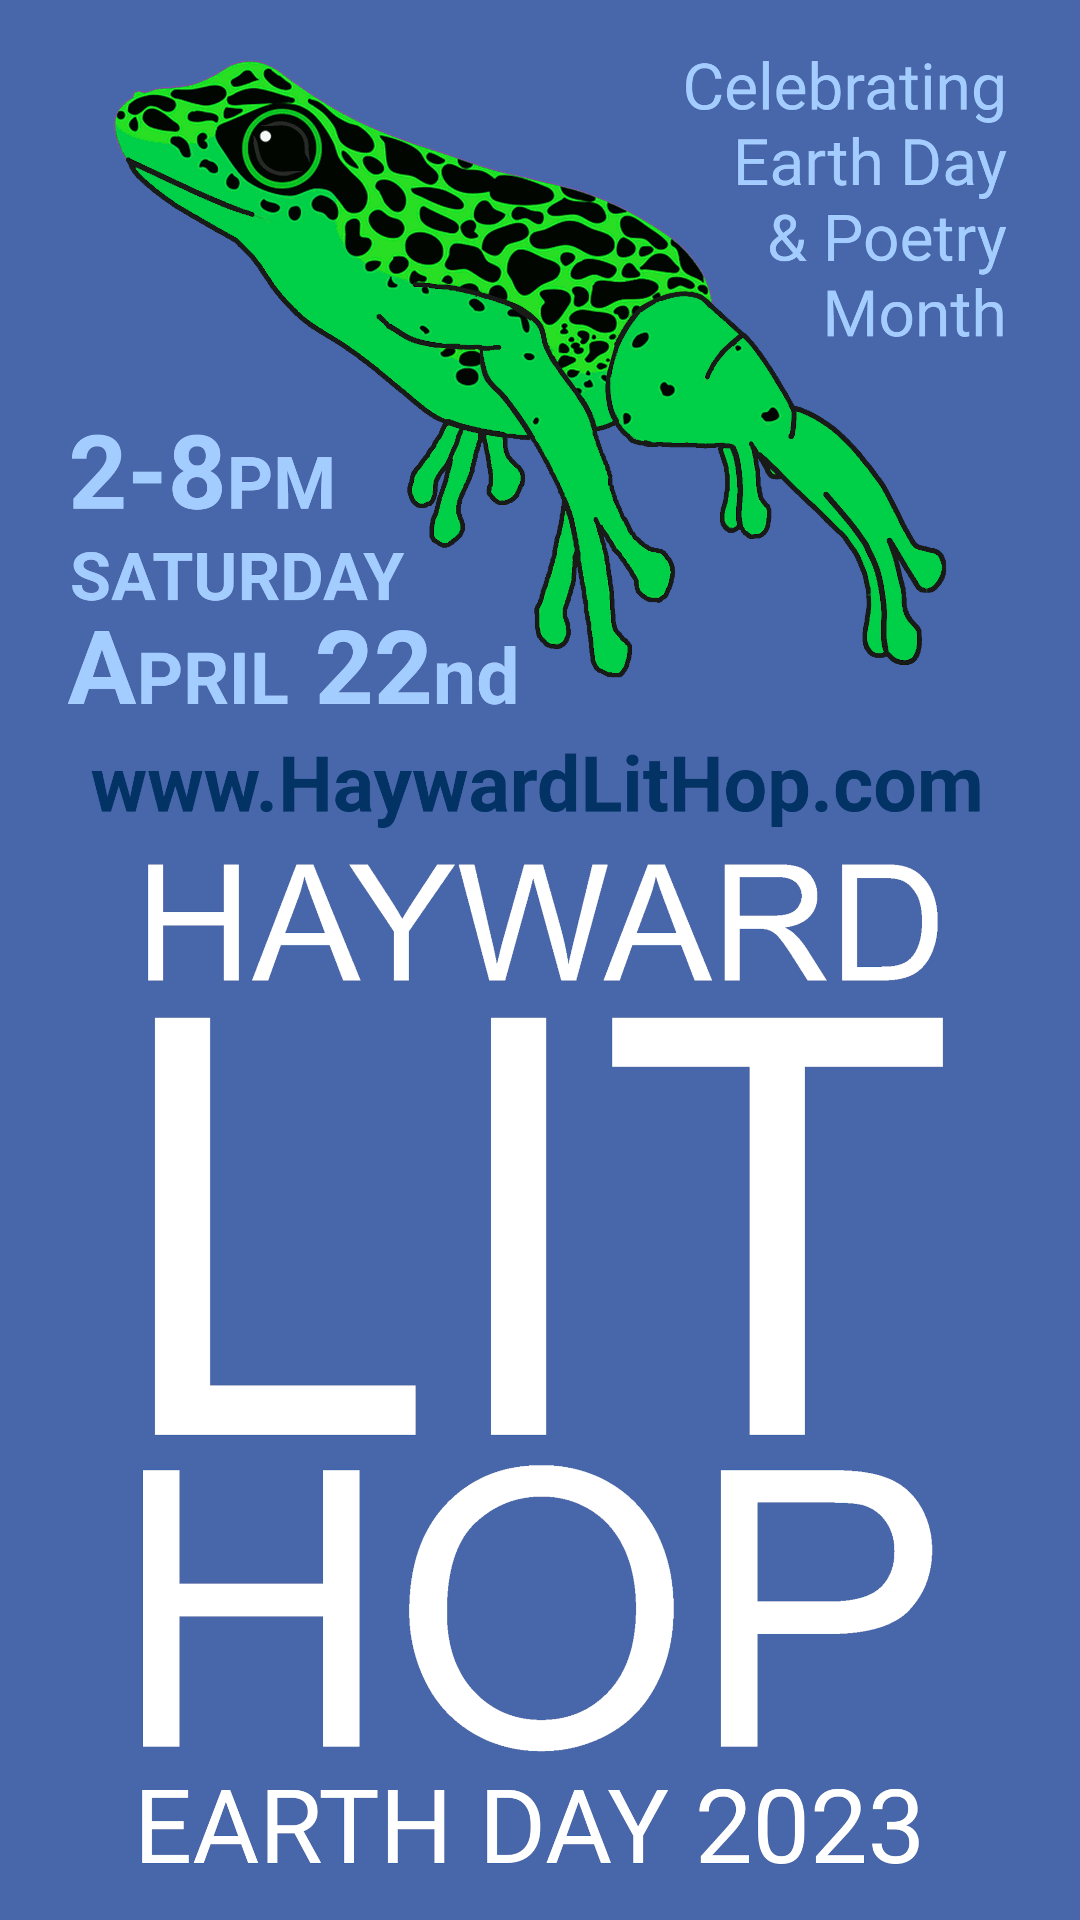 Hayward Lit Hop